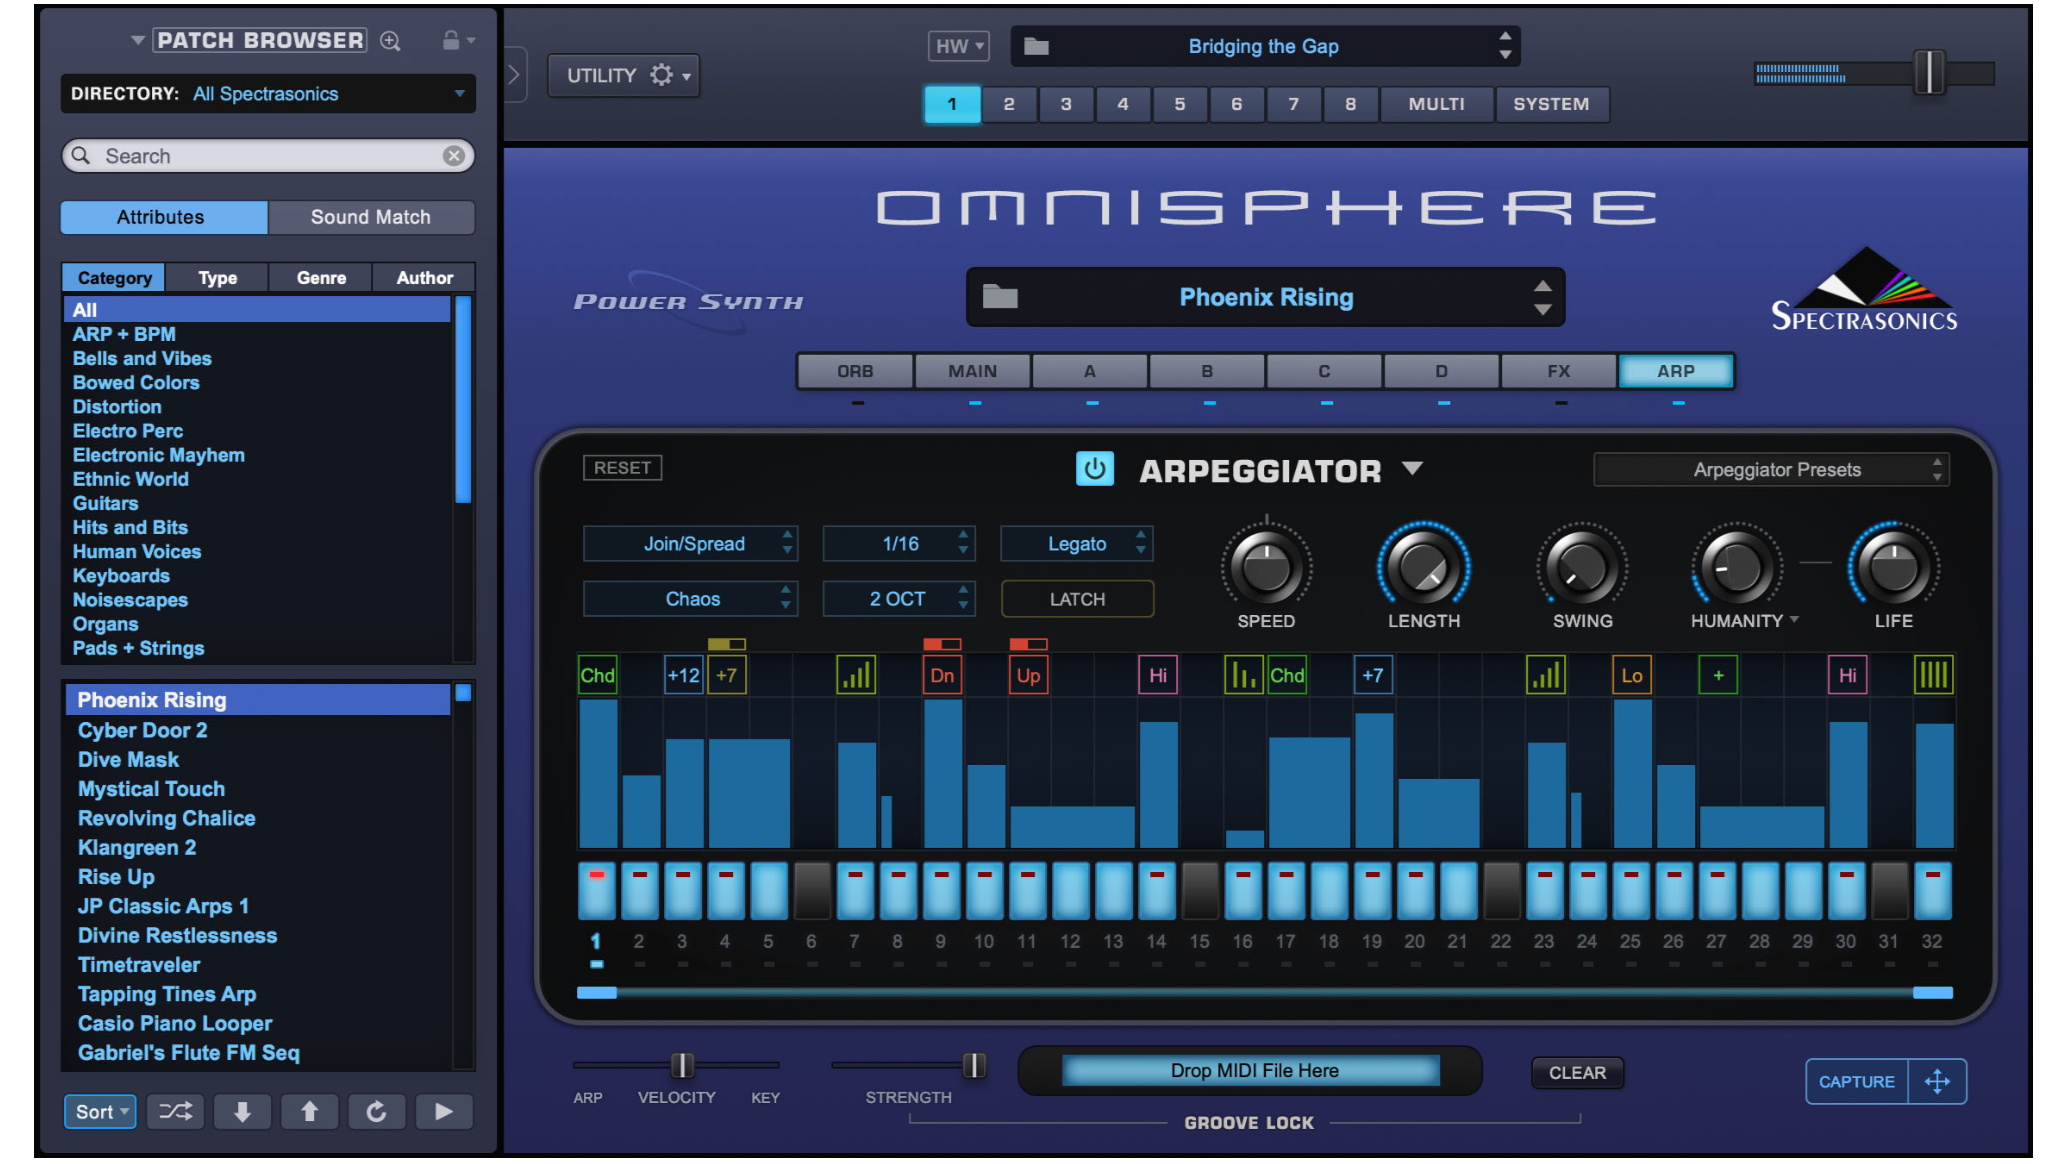 Best synth plugins: Spectrasonics Omnisphere 2